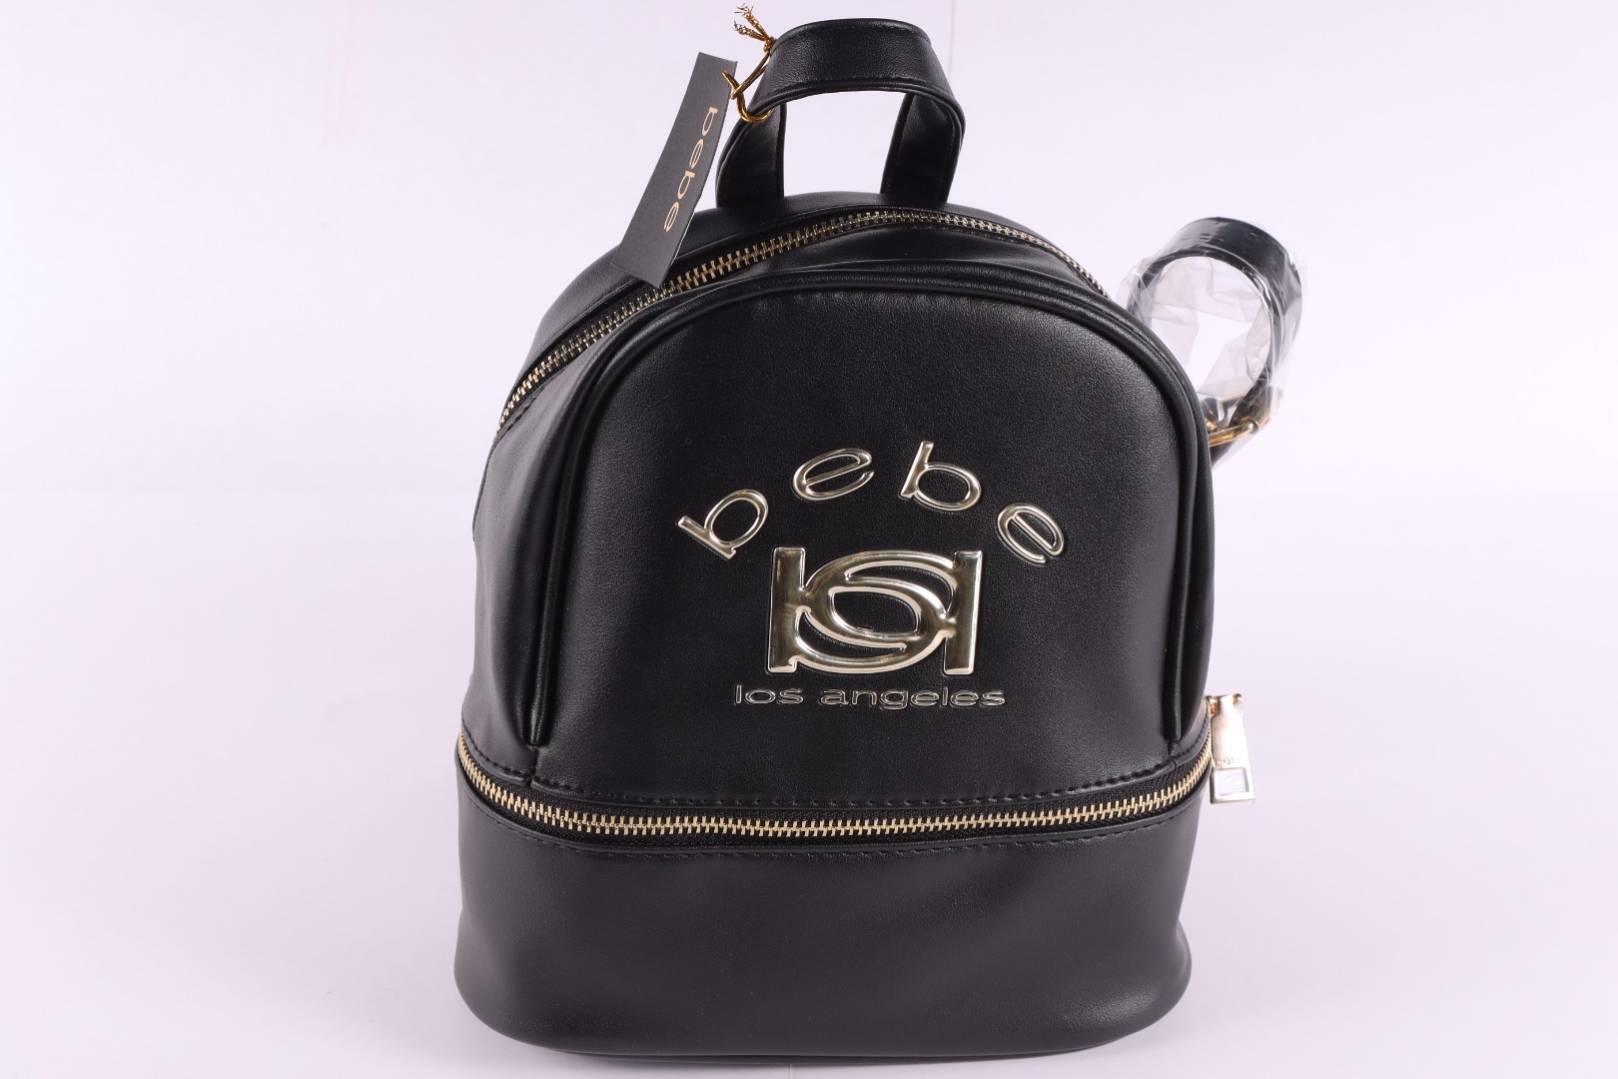 Via Trading | Assorted Bebe New Overstock Handbags Loads